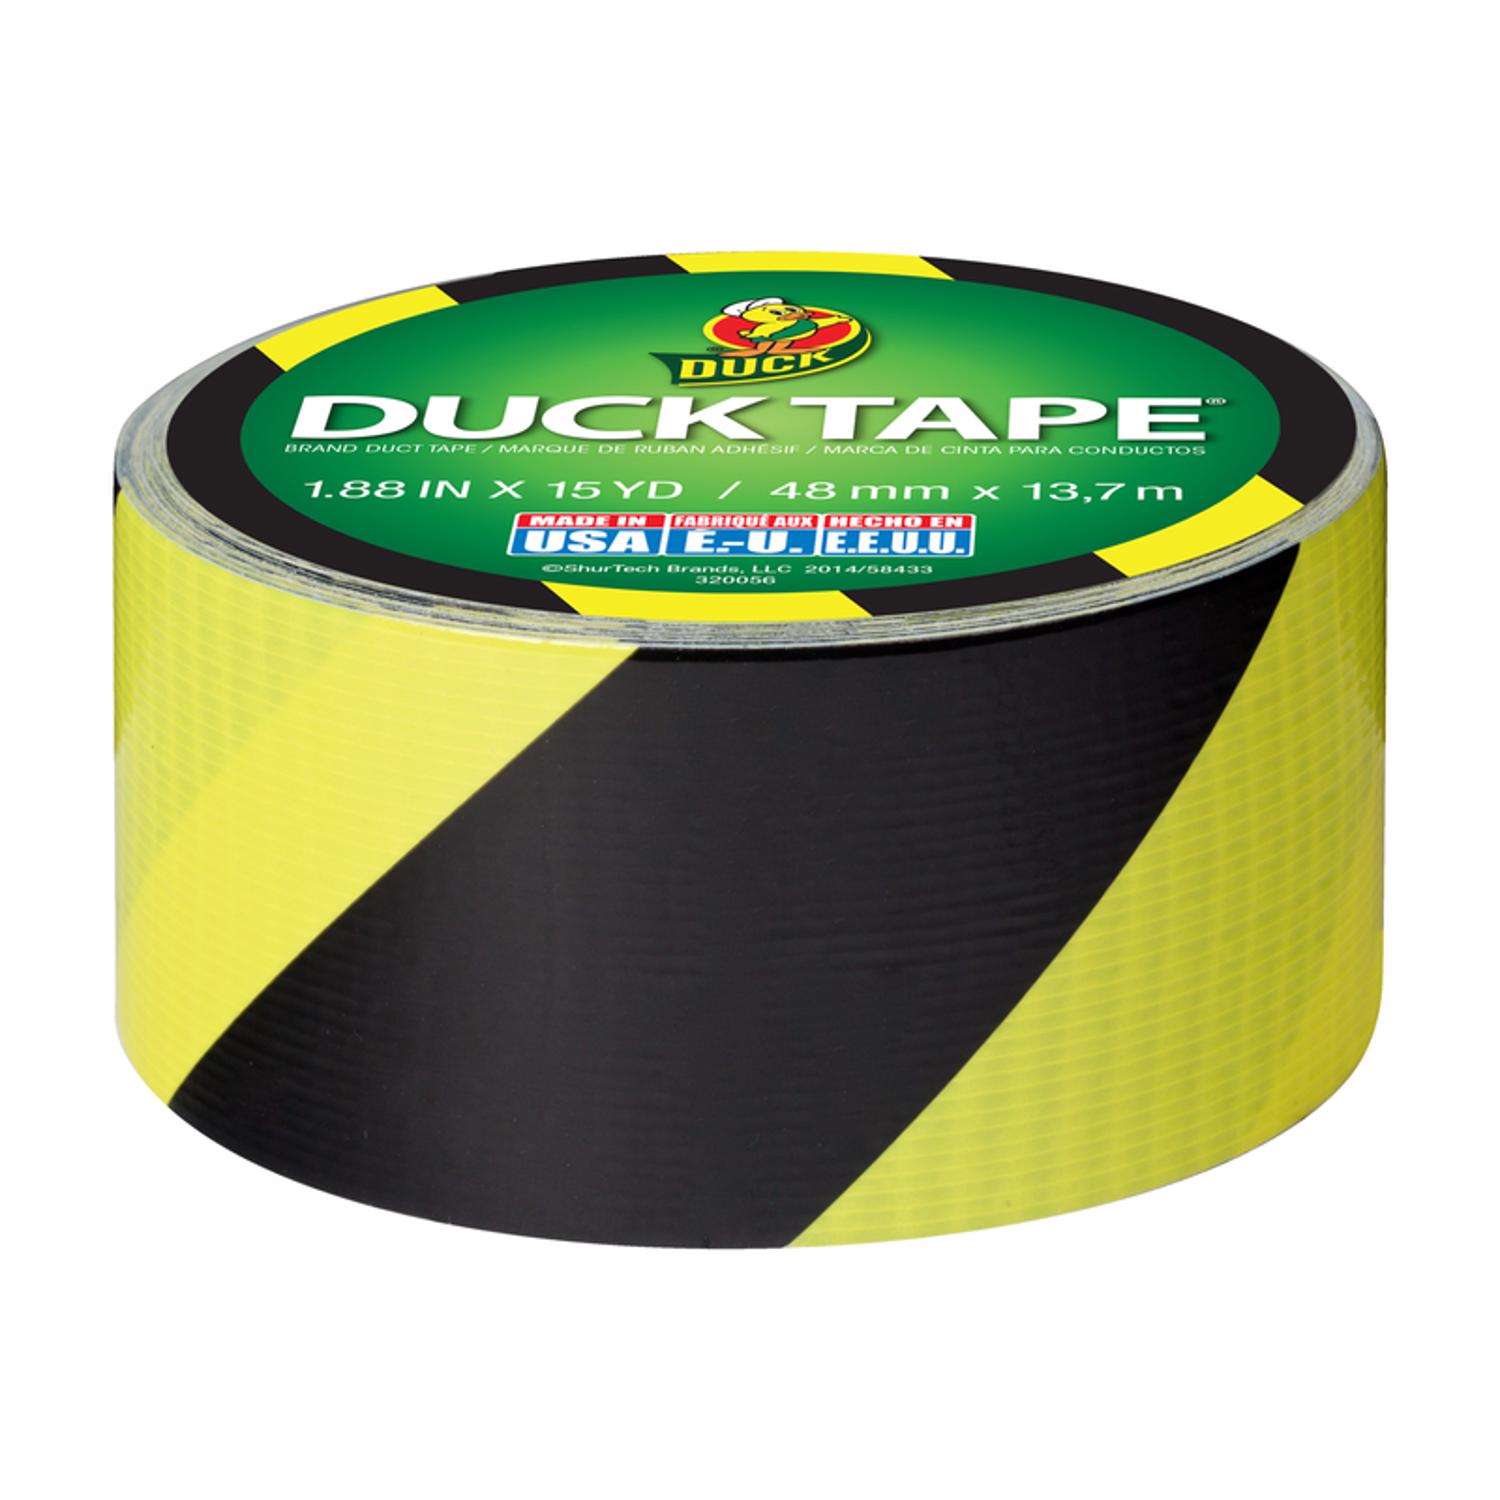 Duck Brand Chalkboard Crafting Tape